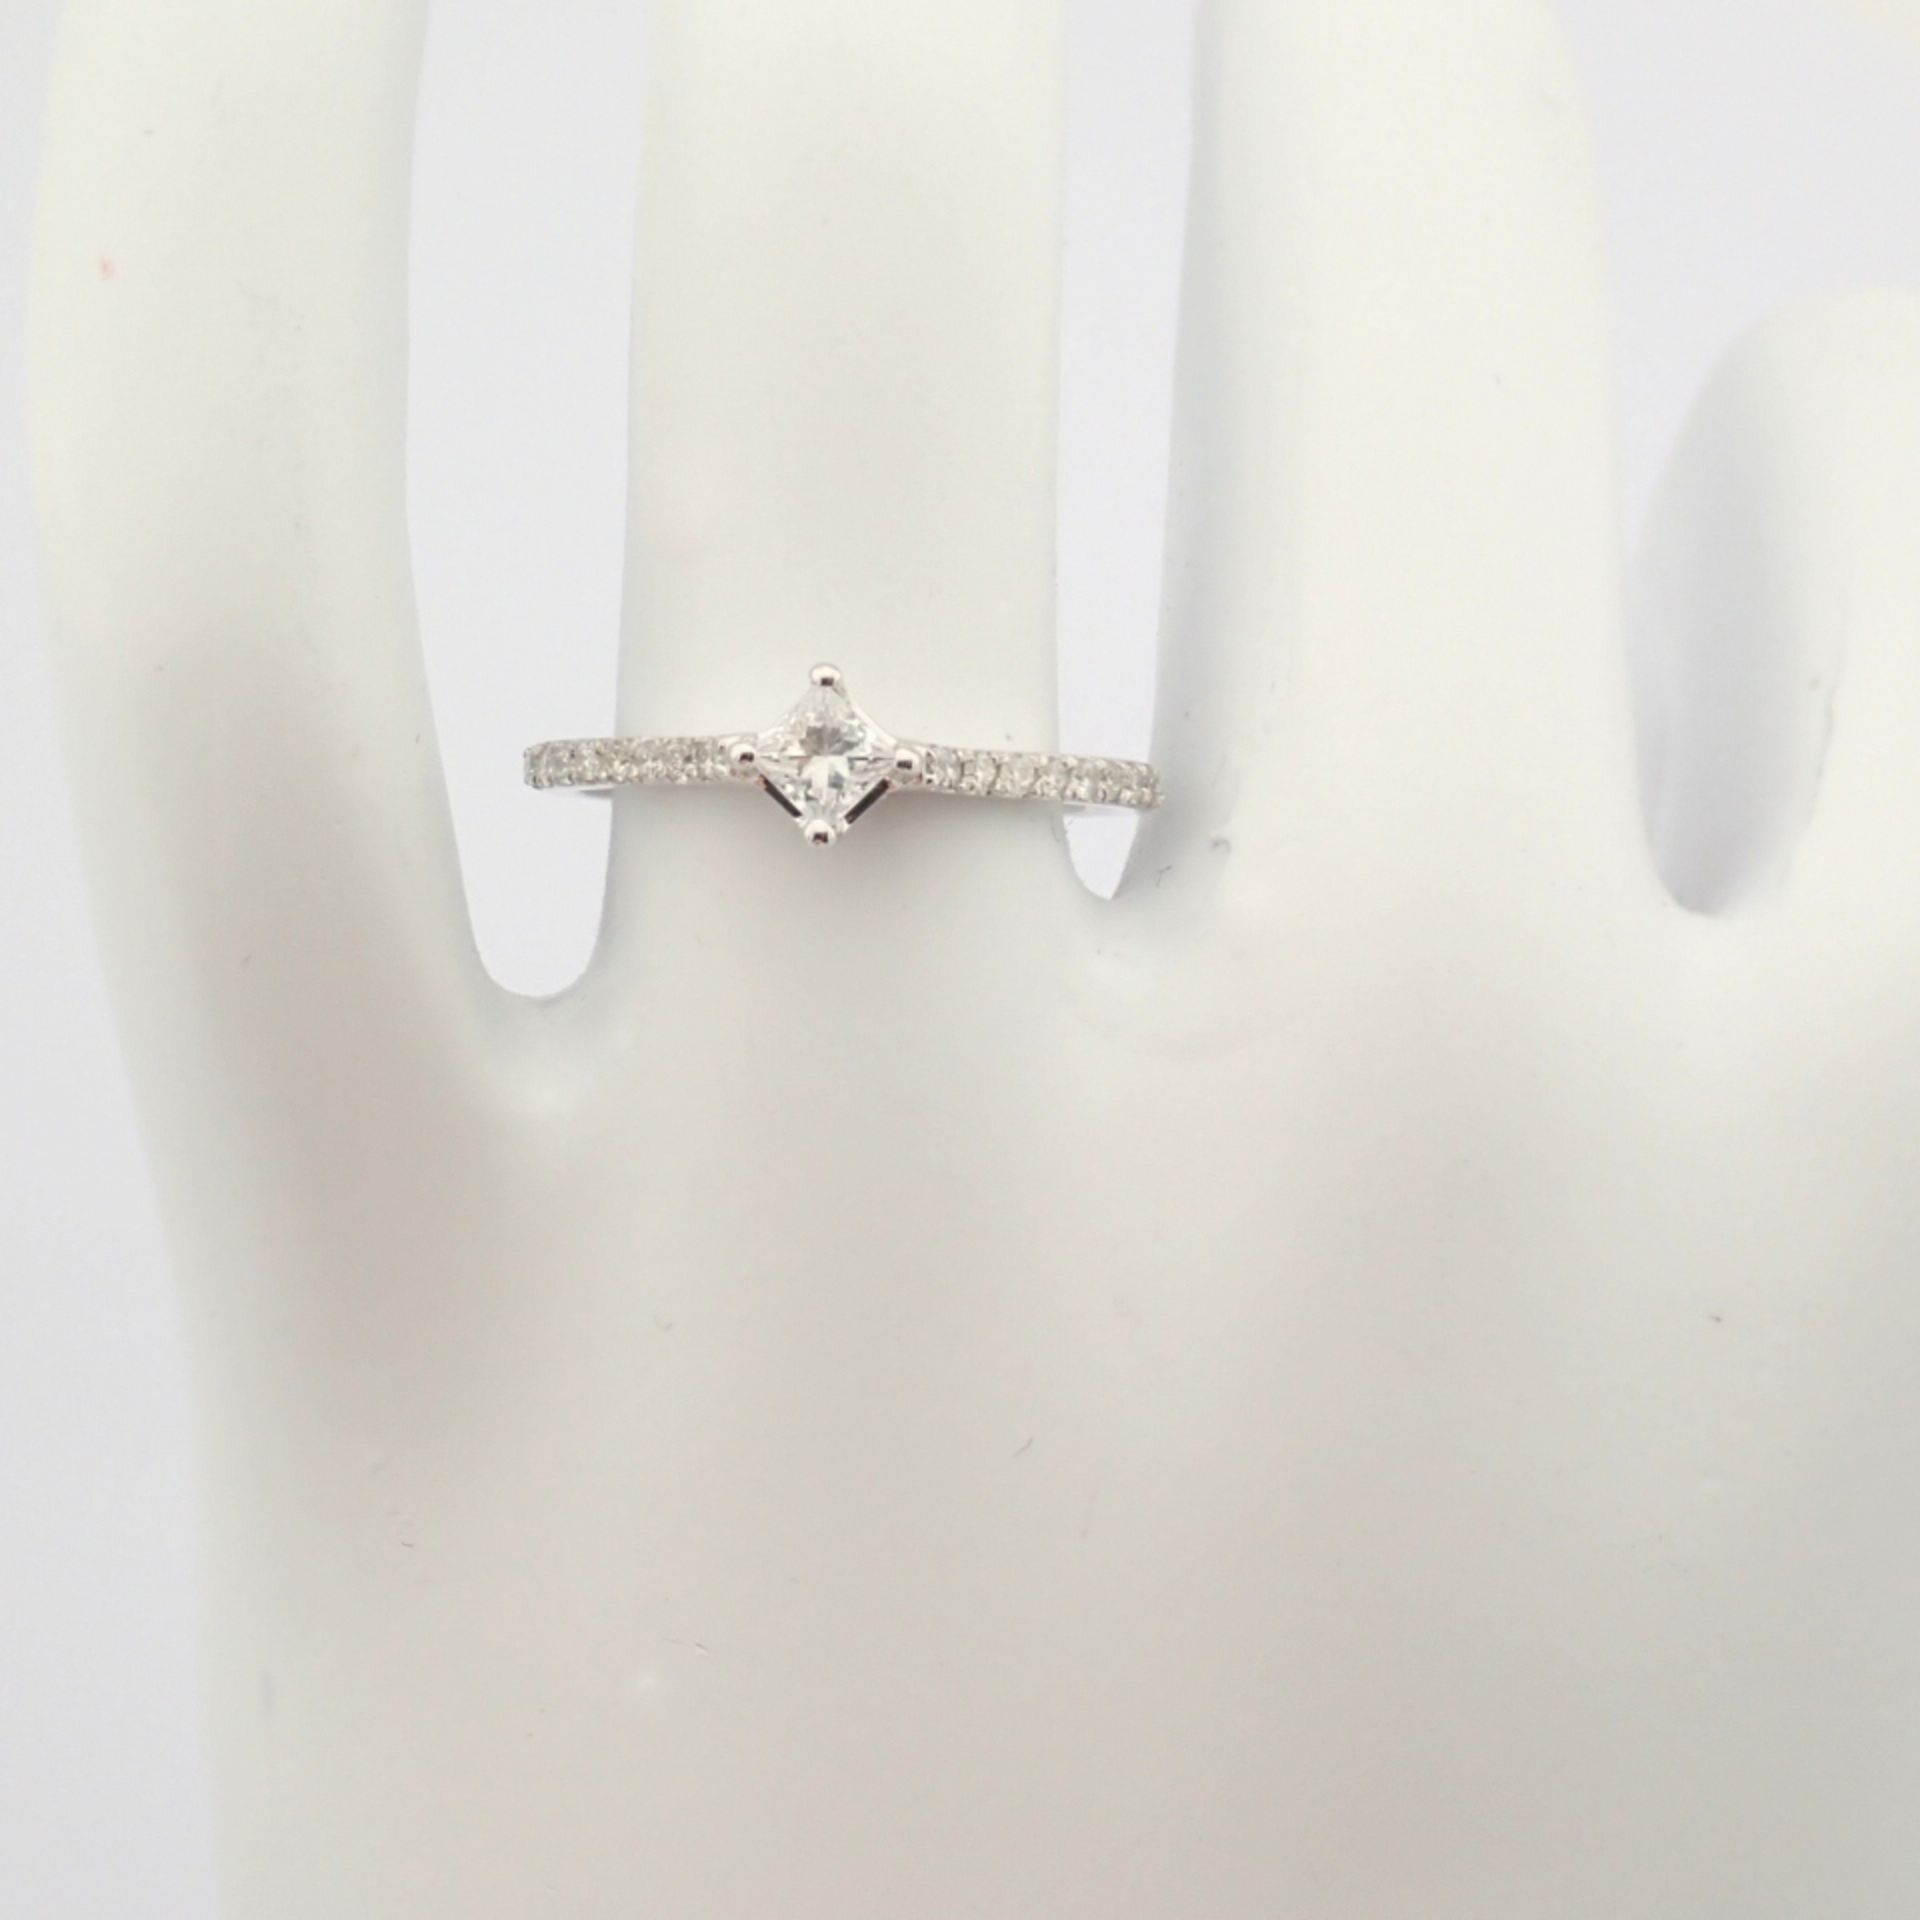 Certificated 14K White Gold Princess Cut Diamond & Diamond Ring (Total 0.4 ct Stone) - Image 5 of 9